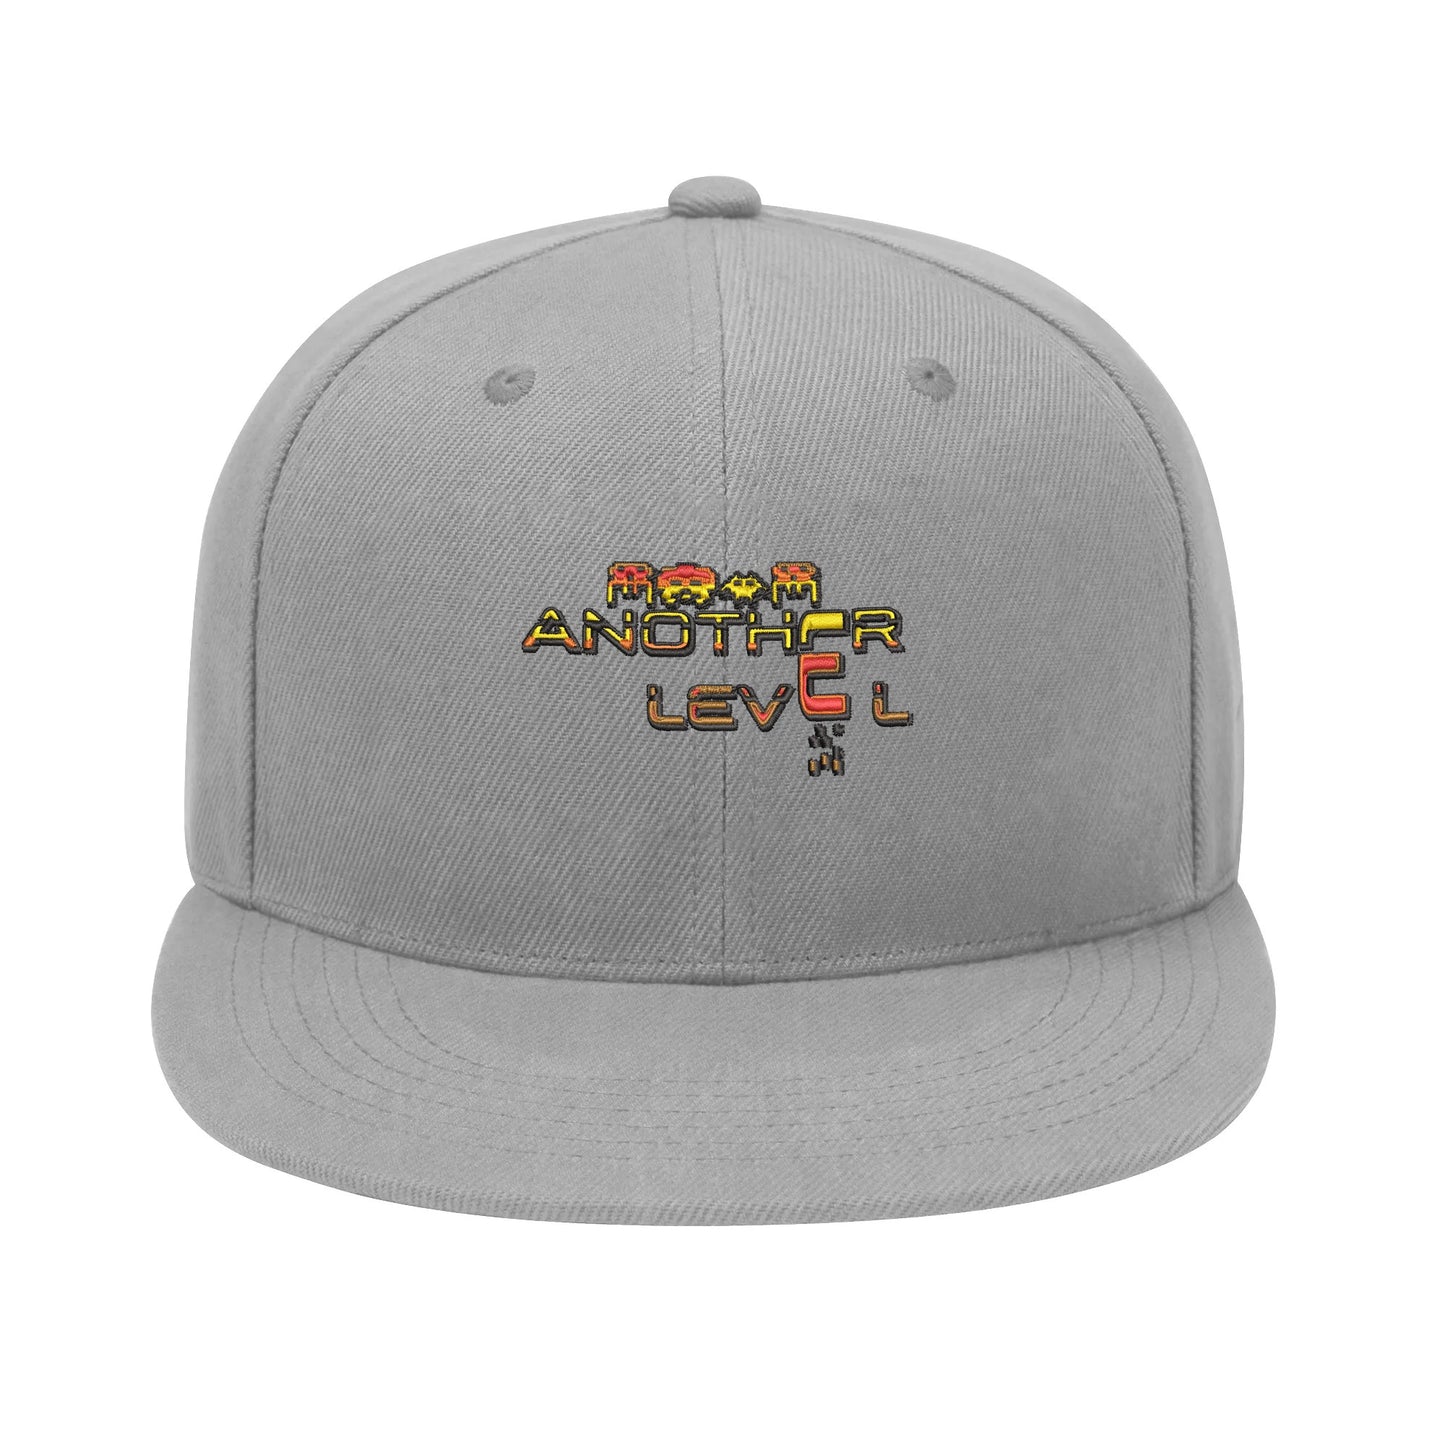 FZ Hip-hop Snapback Hat